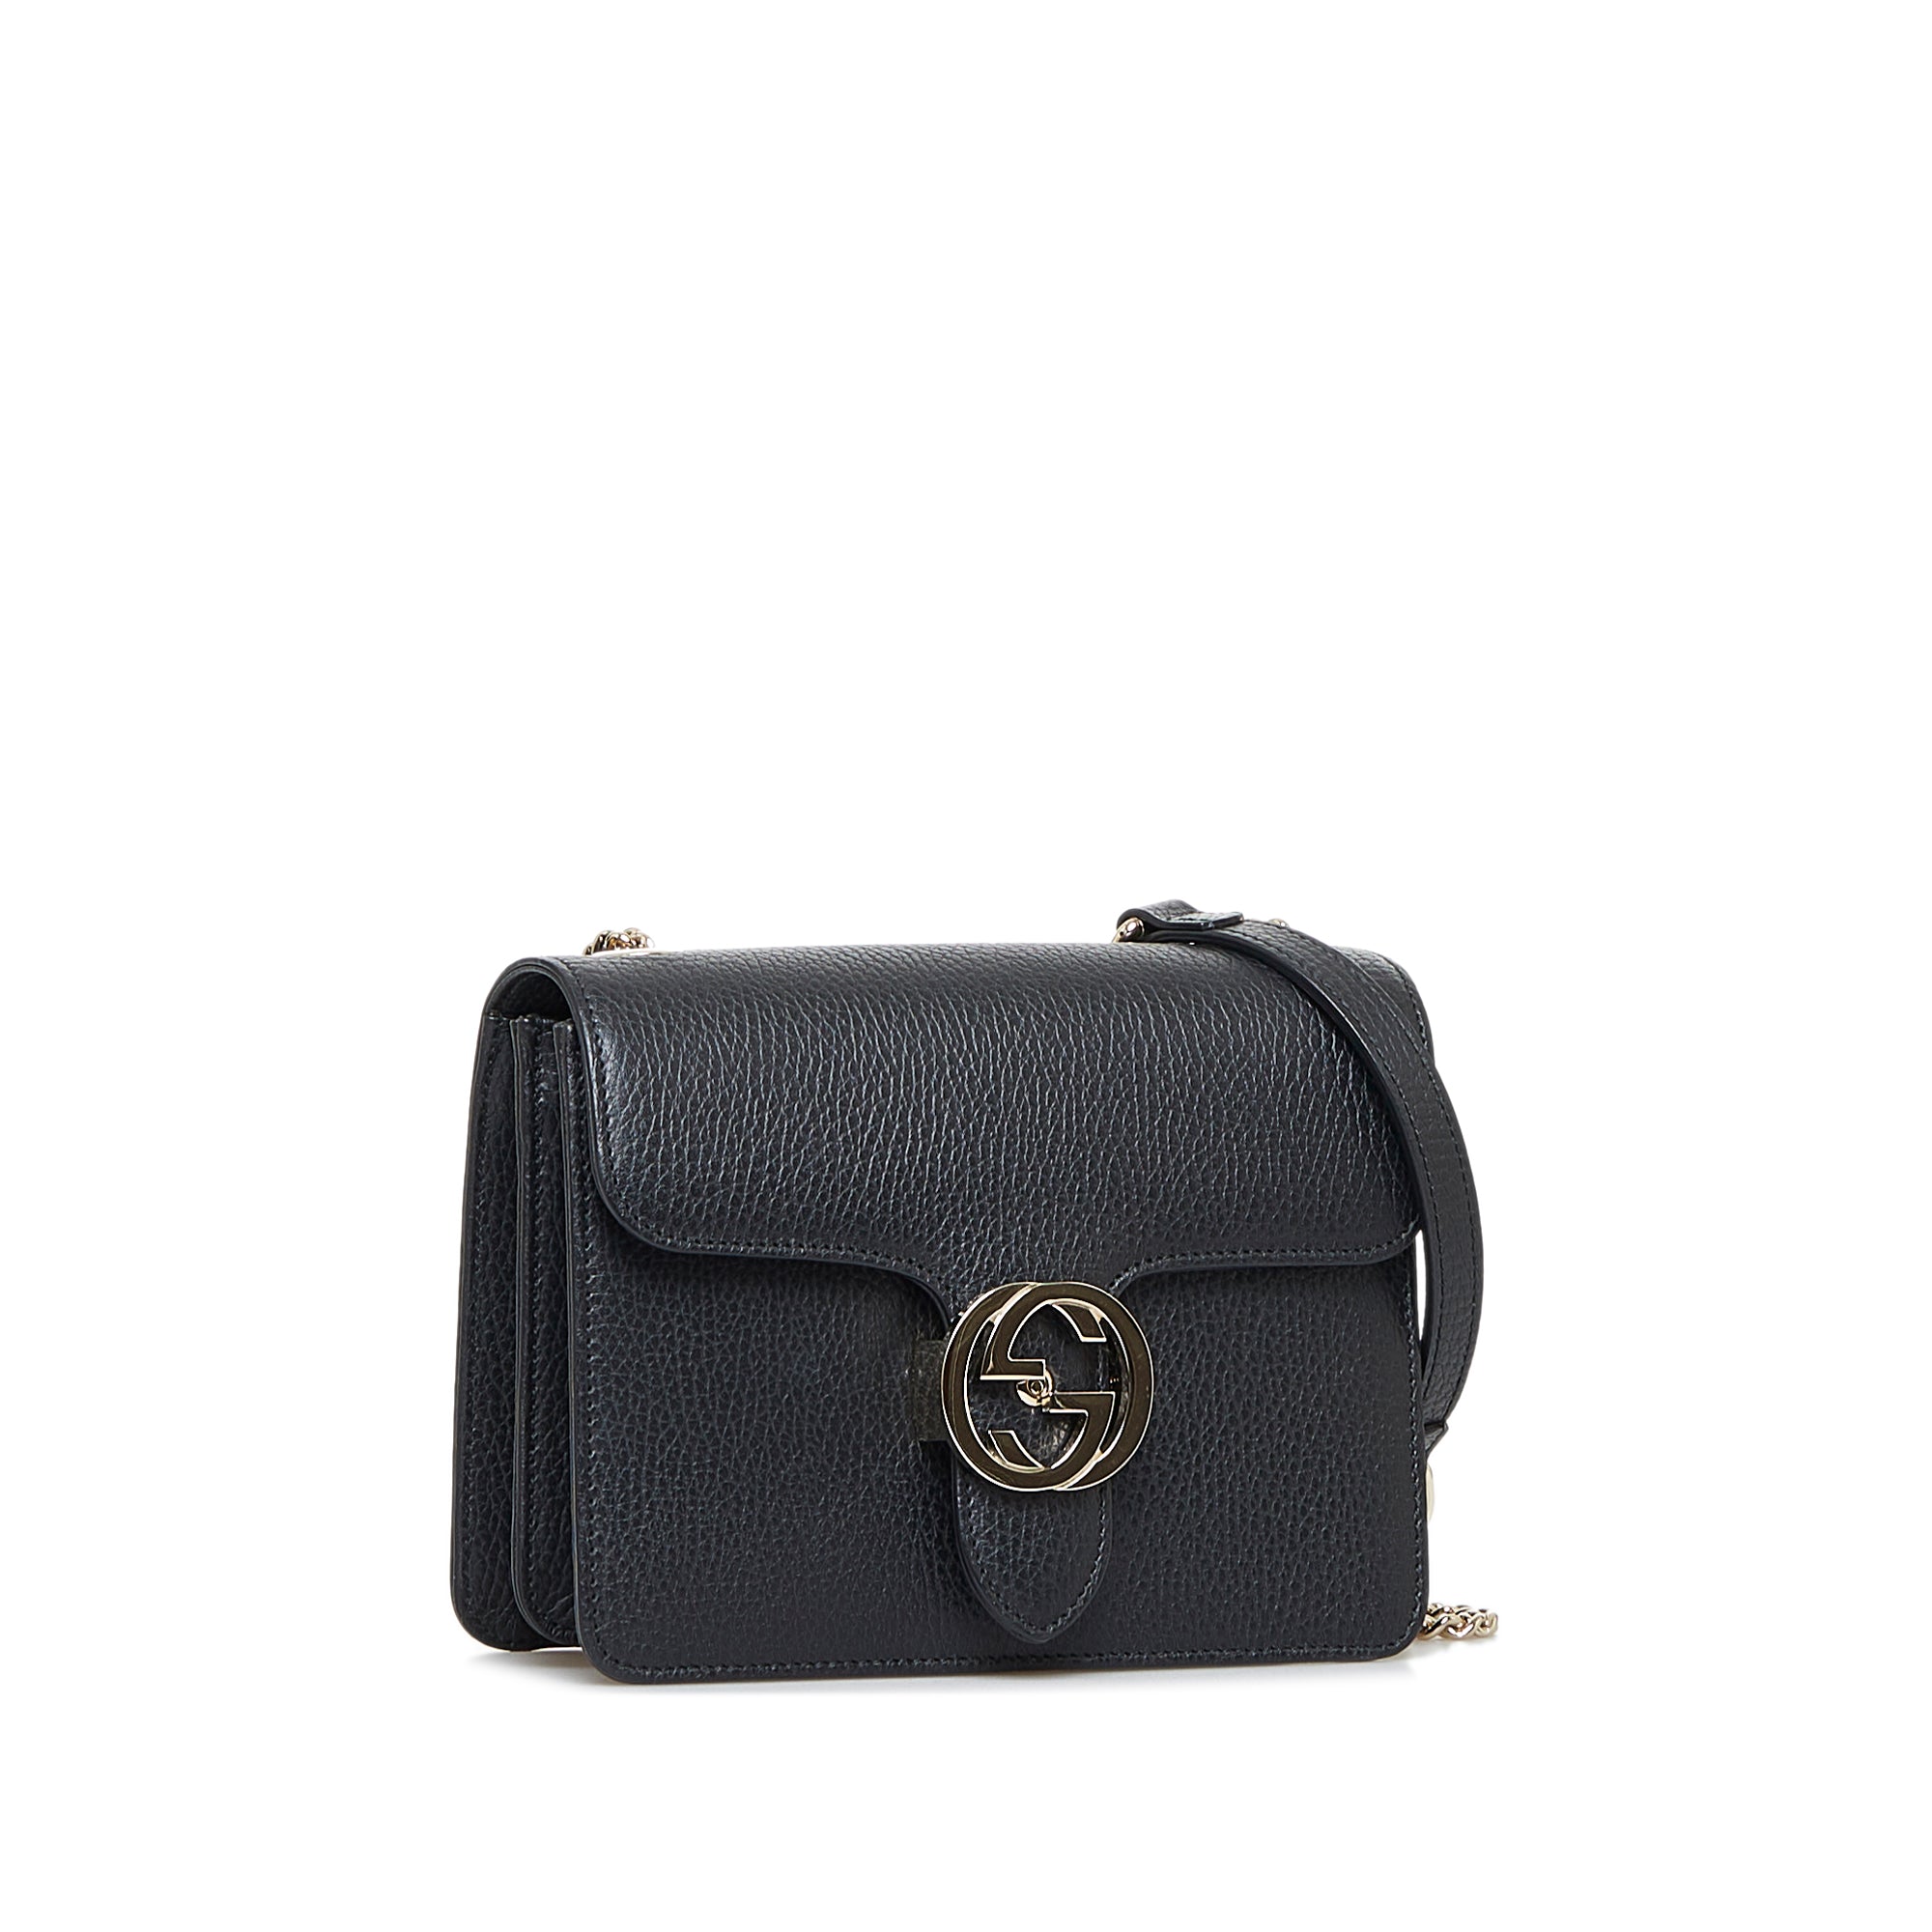 Gucci Interlocking BLACK Marmont Leather Silver Handbag Italy Chain 510304  NEW